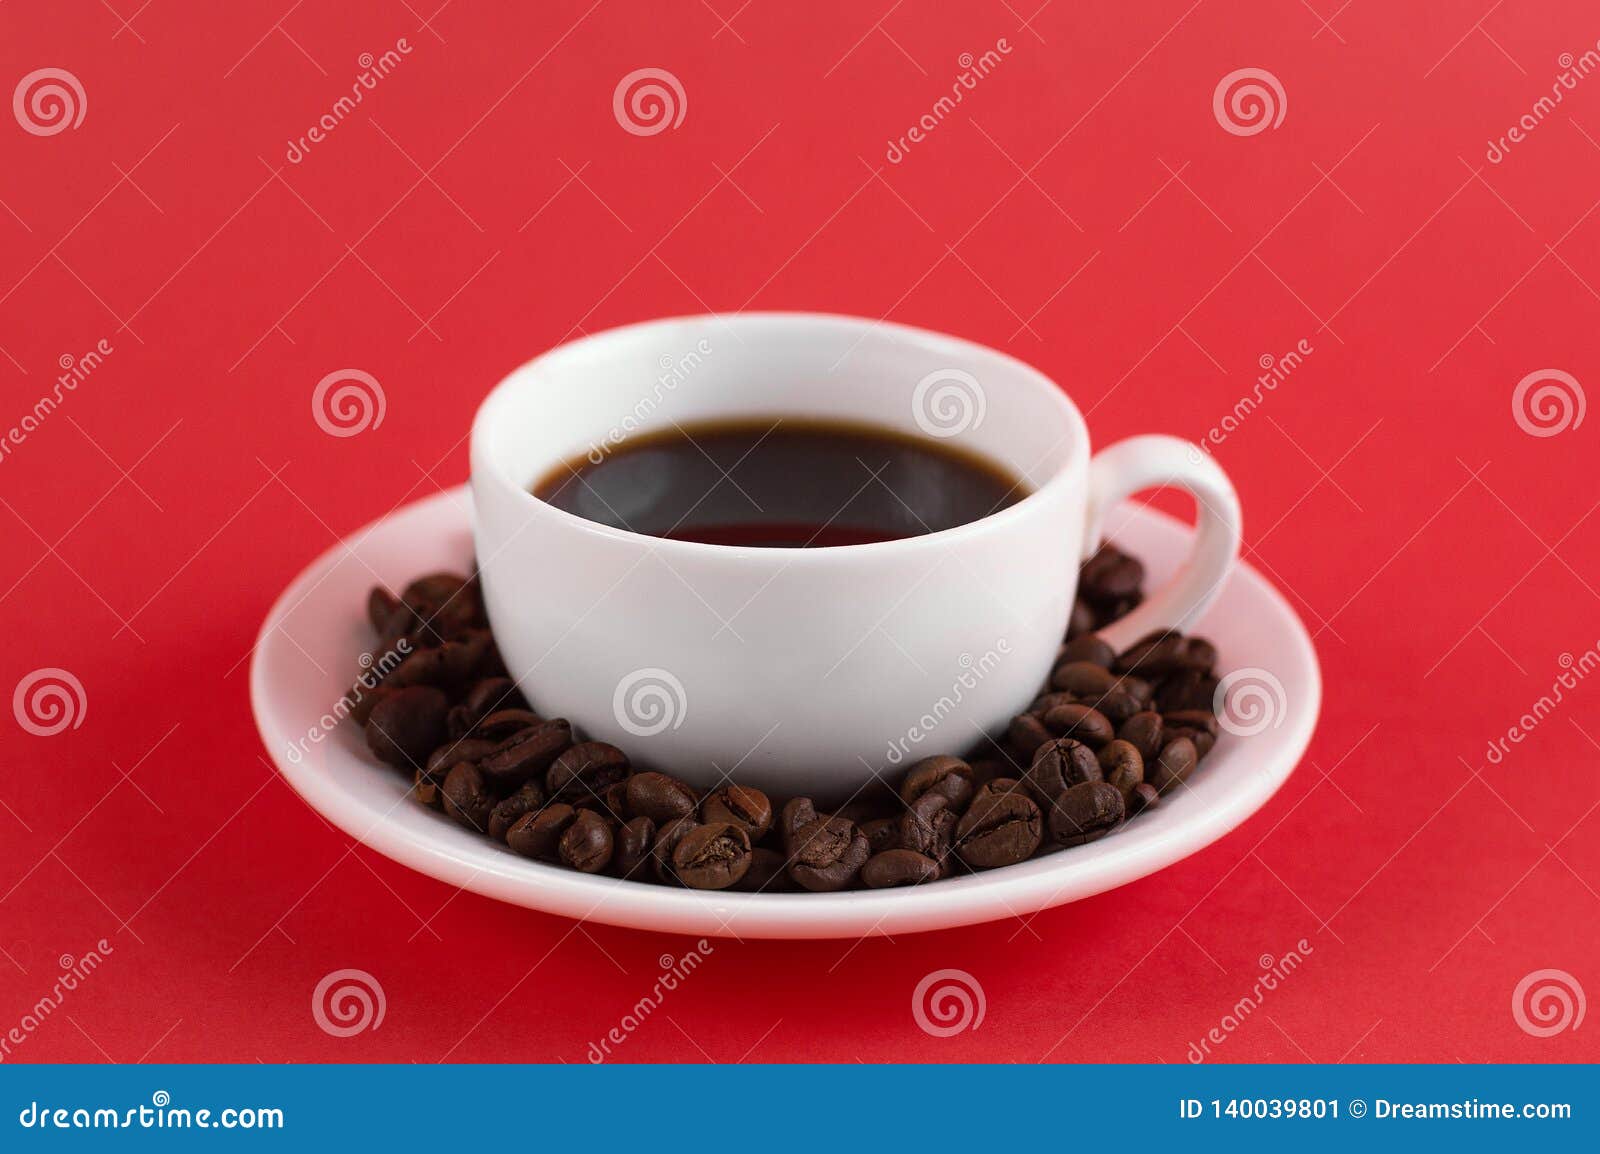 Americano black coffee stock image. Image of caffeine